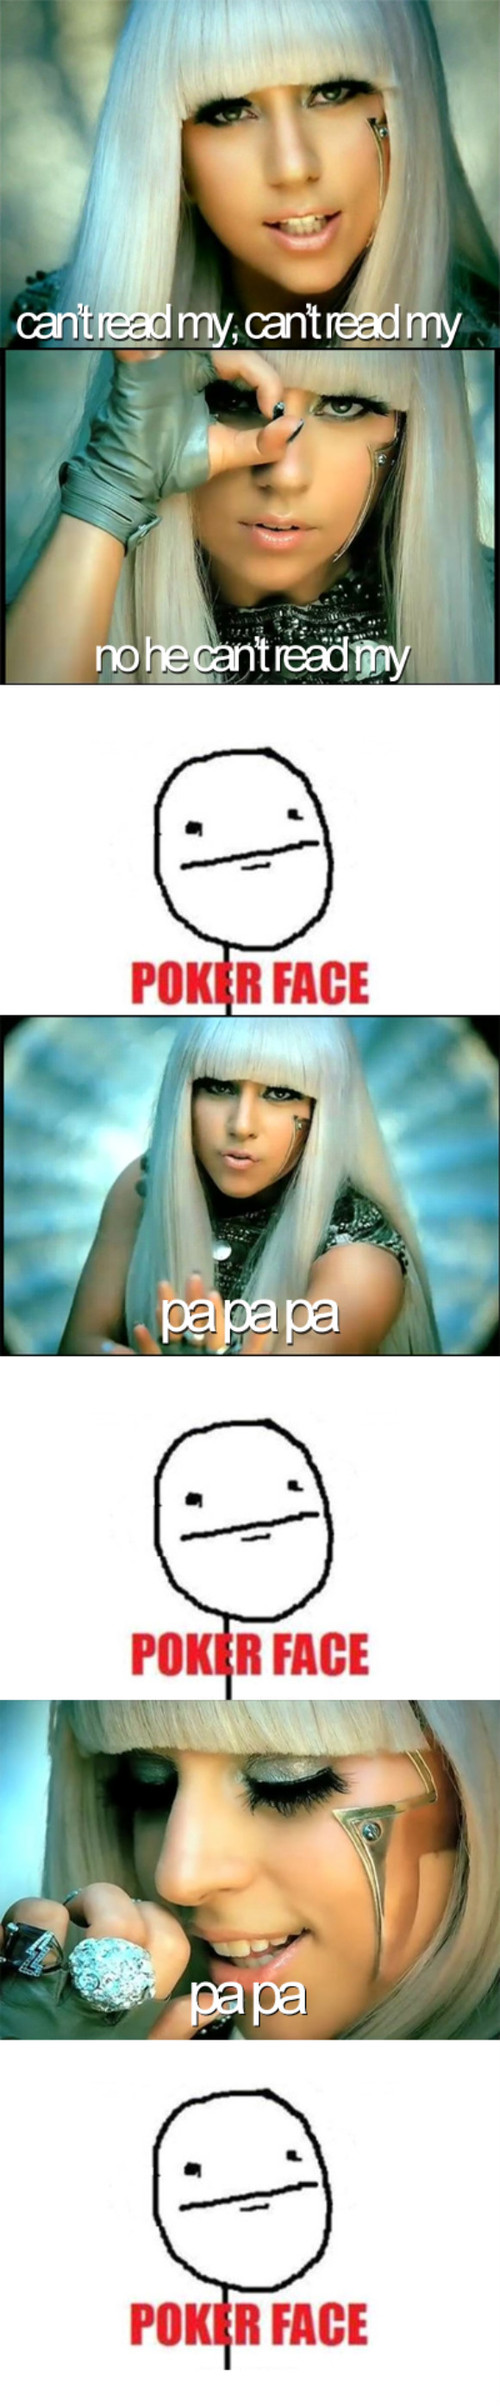 Lady GaGa has a poker face –  